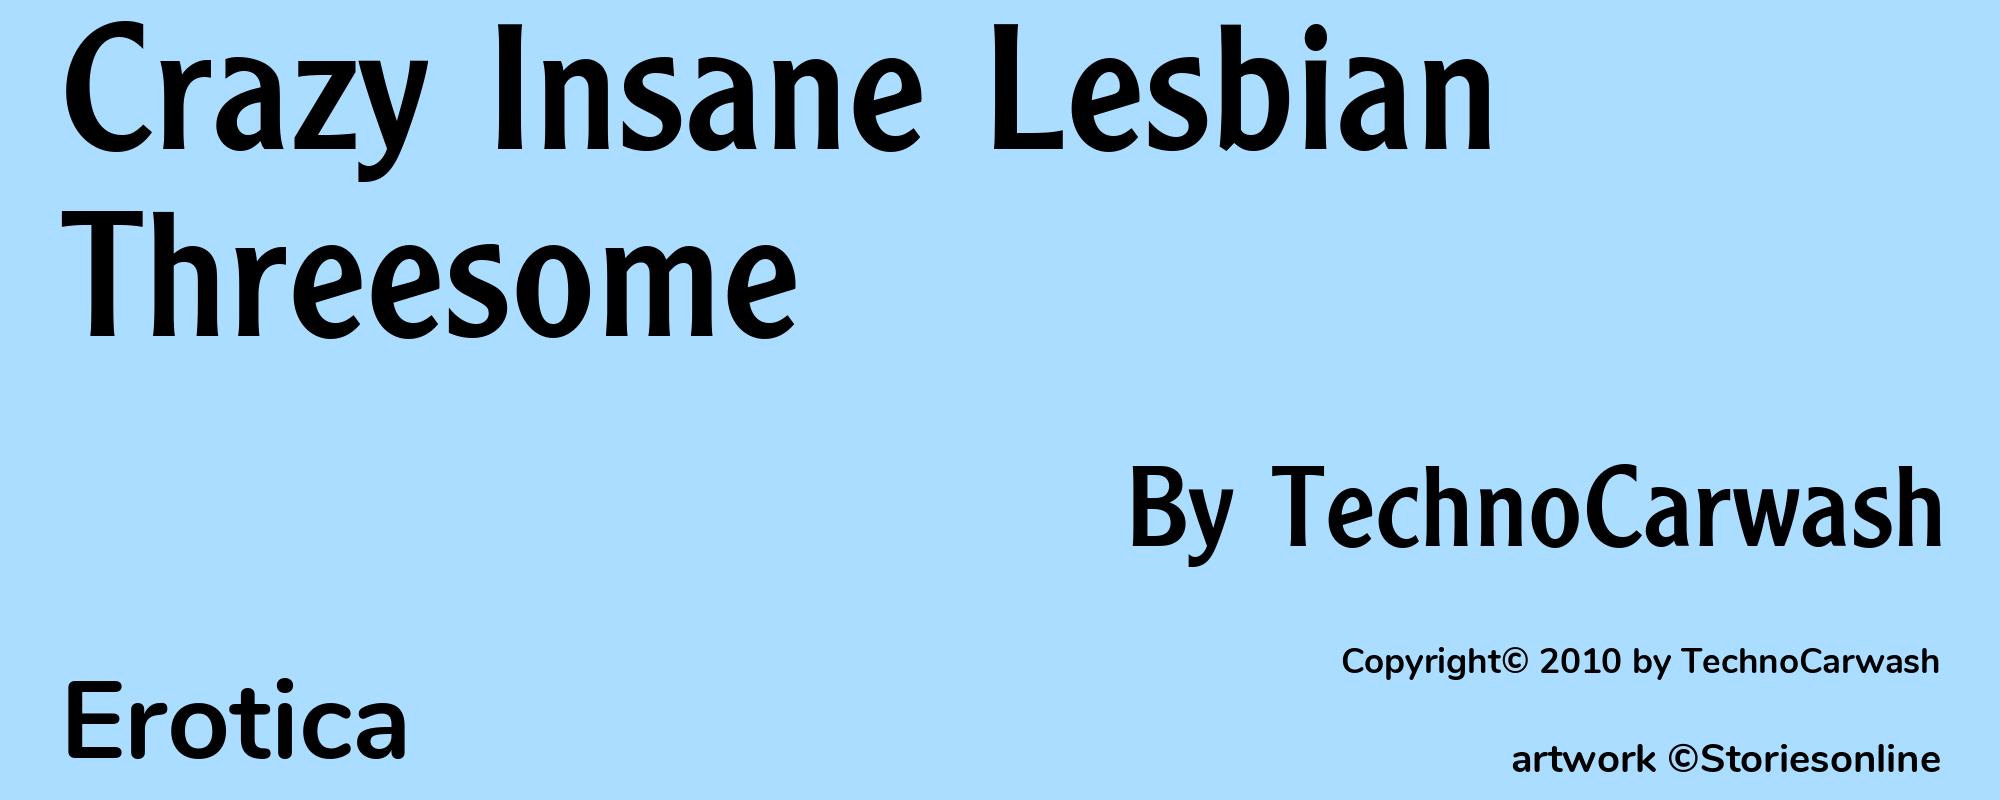 Crazy Insane Lesbian Threesome - Cover